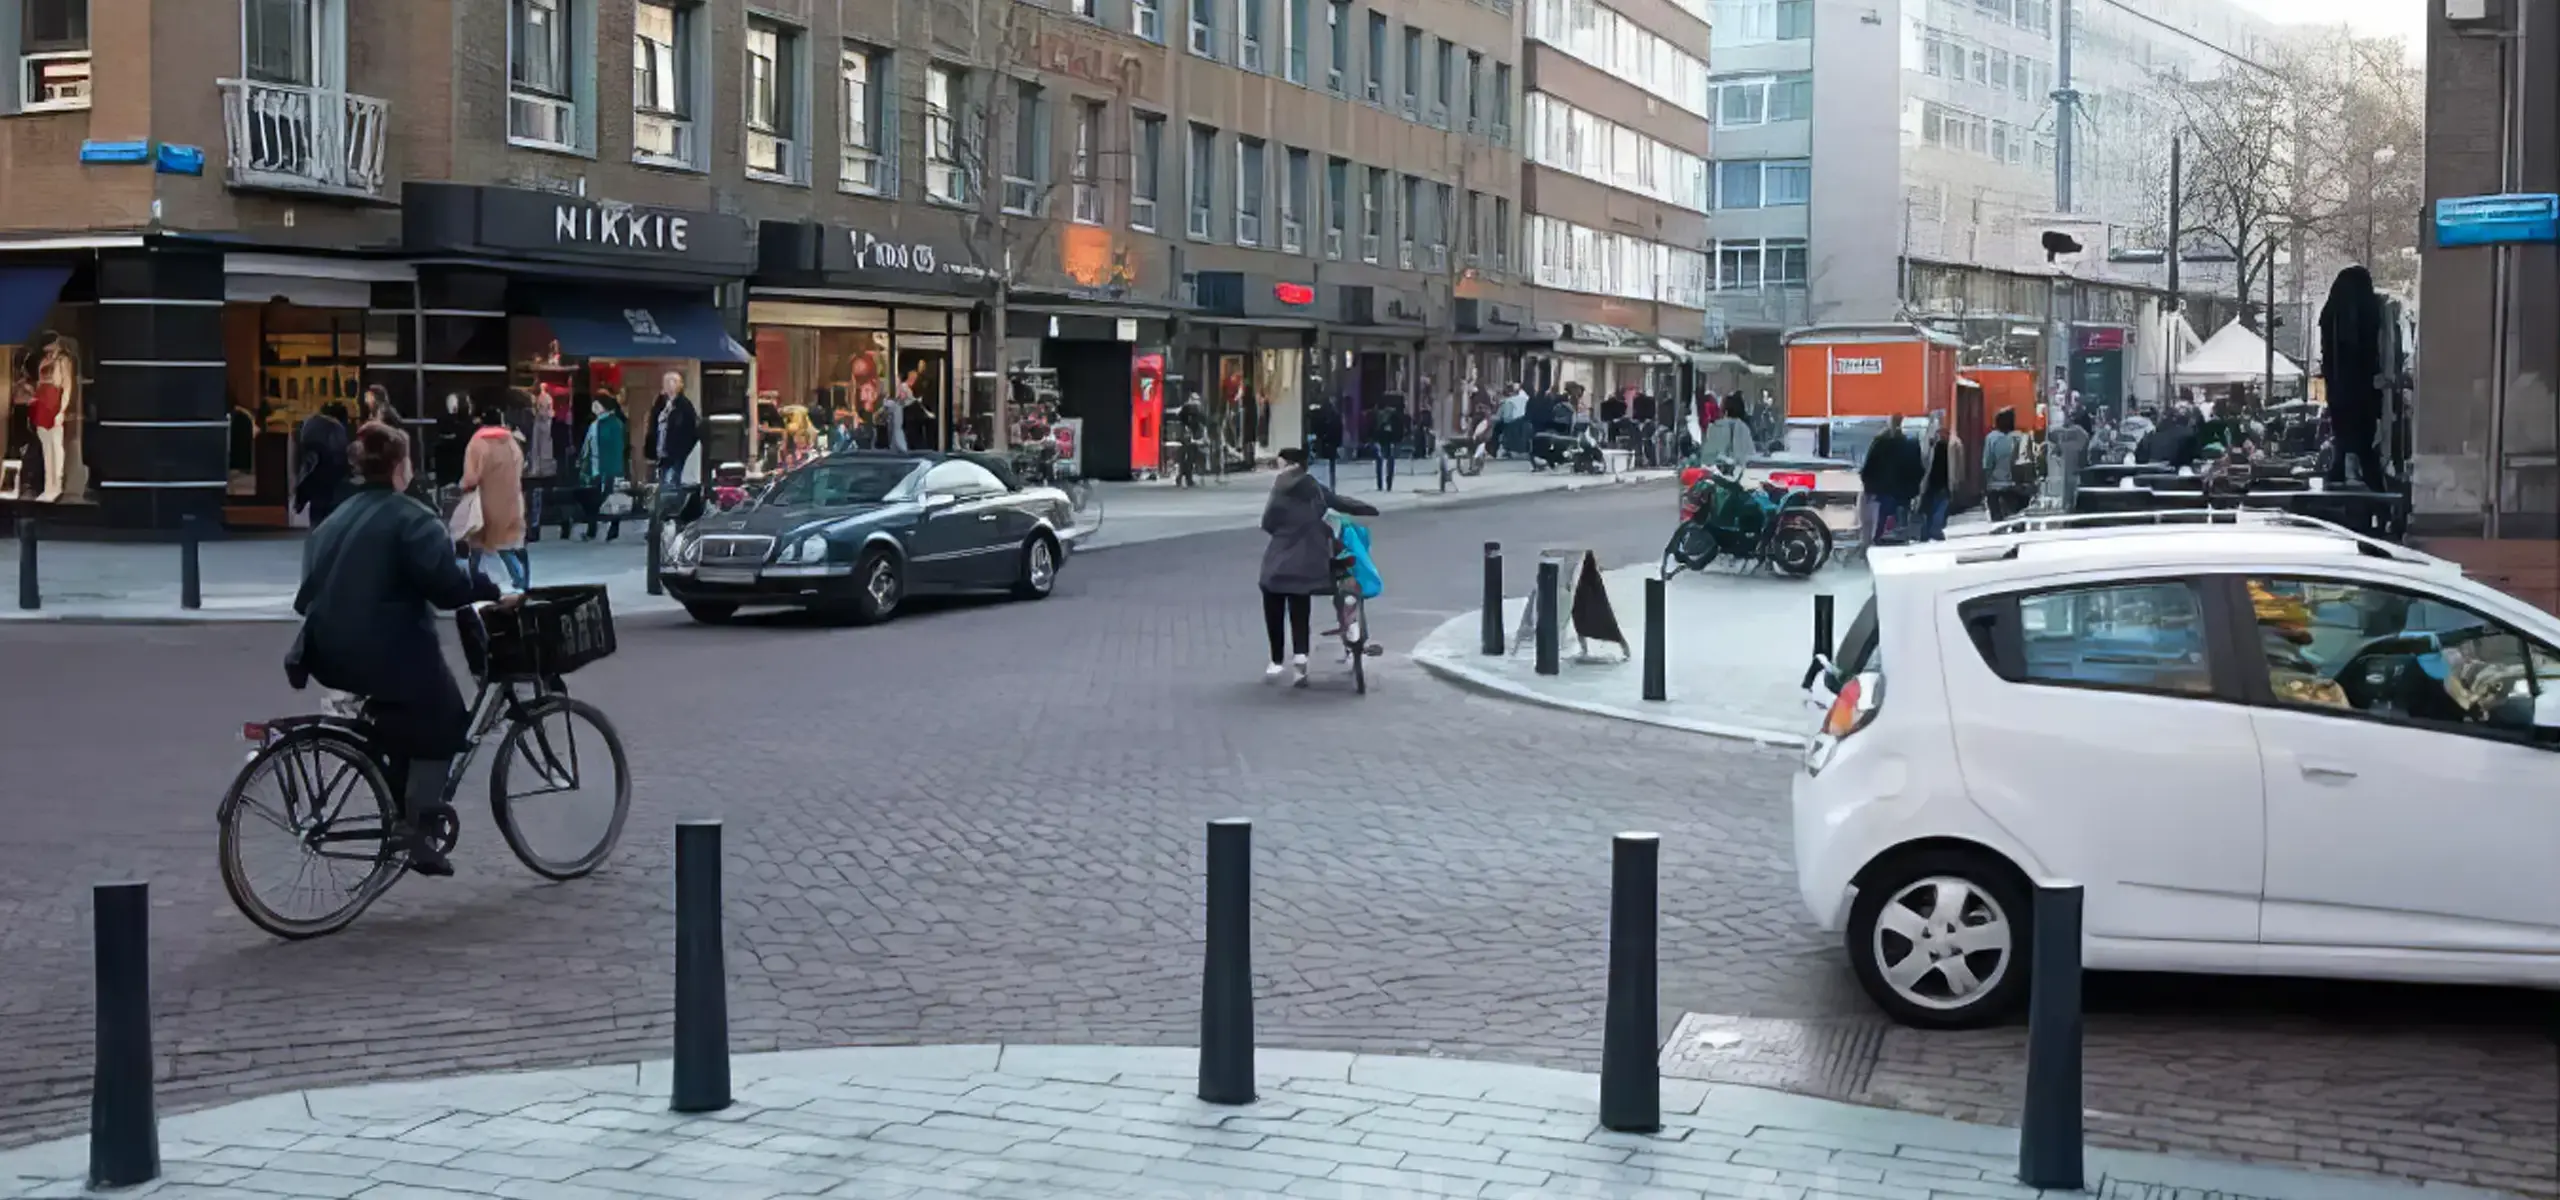 street furniture design bollard for the city of Rotterdam by design agency Groen & Boothman Amsterdam